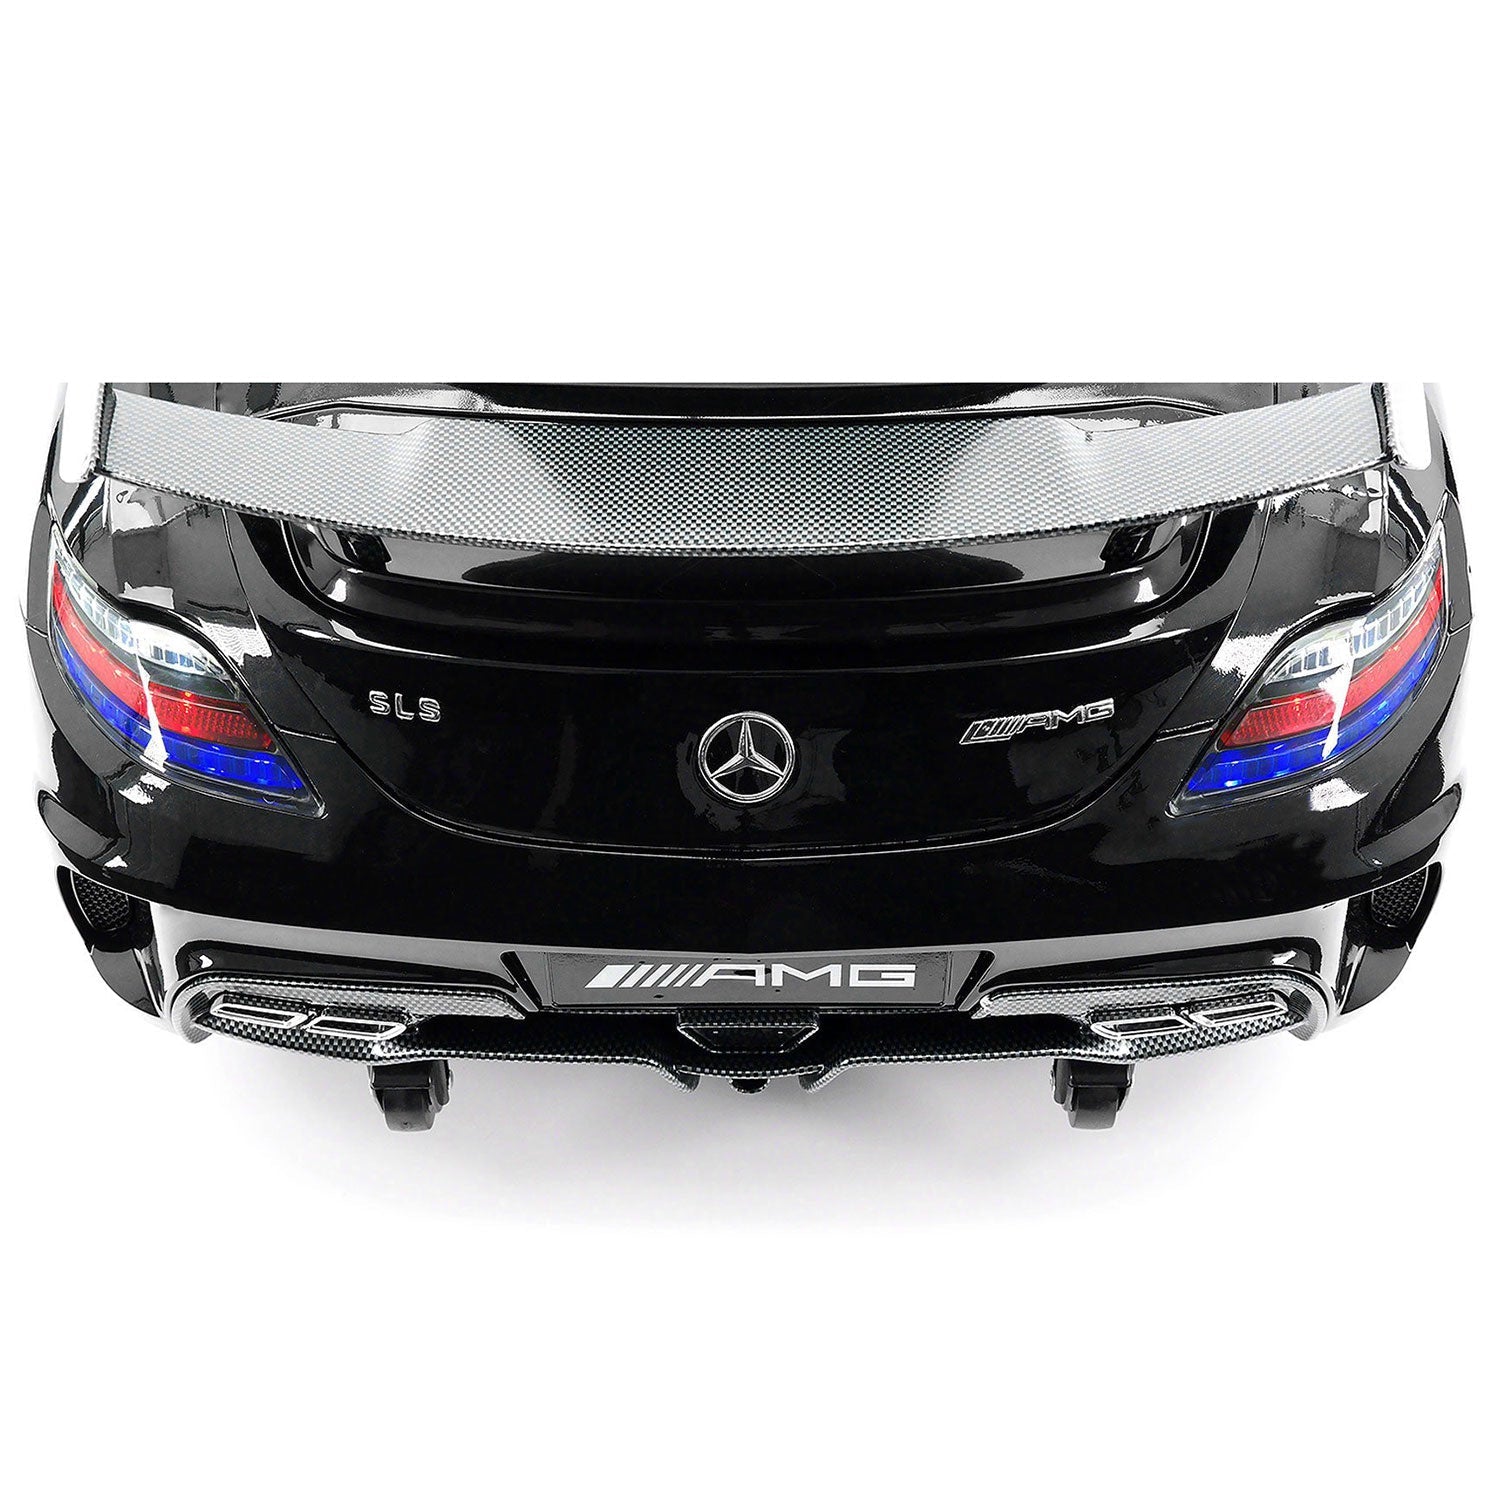 Mercedes Sls Amg Final Edition 12v Kids Ride-on Car With Parental Remote | Black Metallic